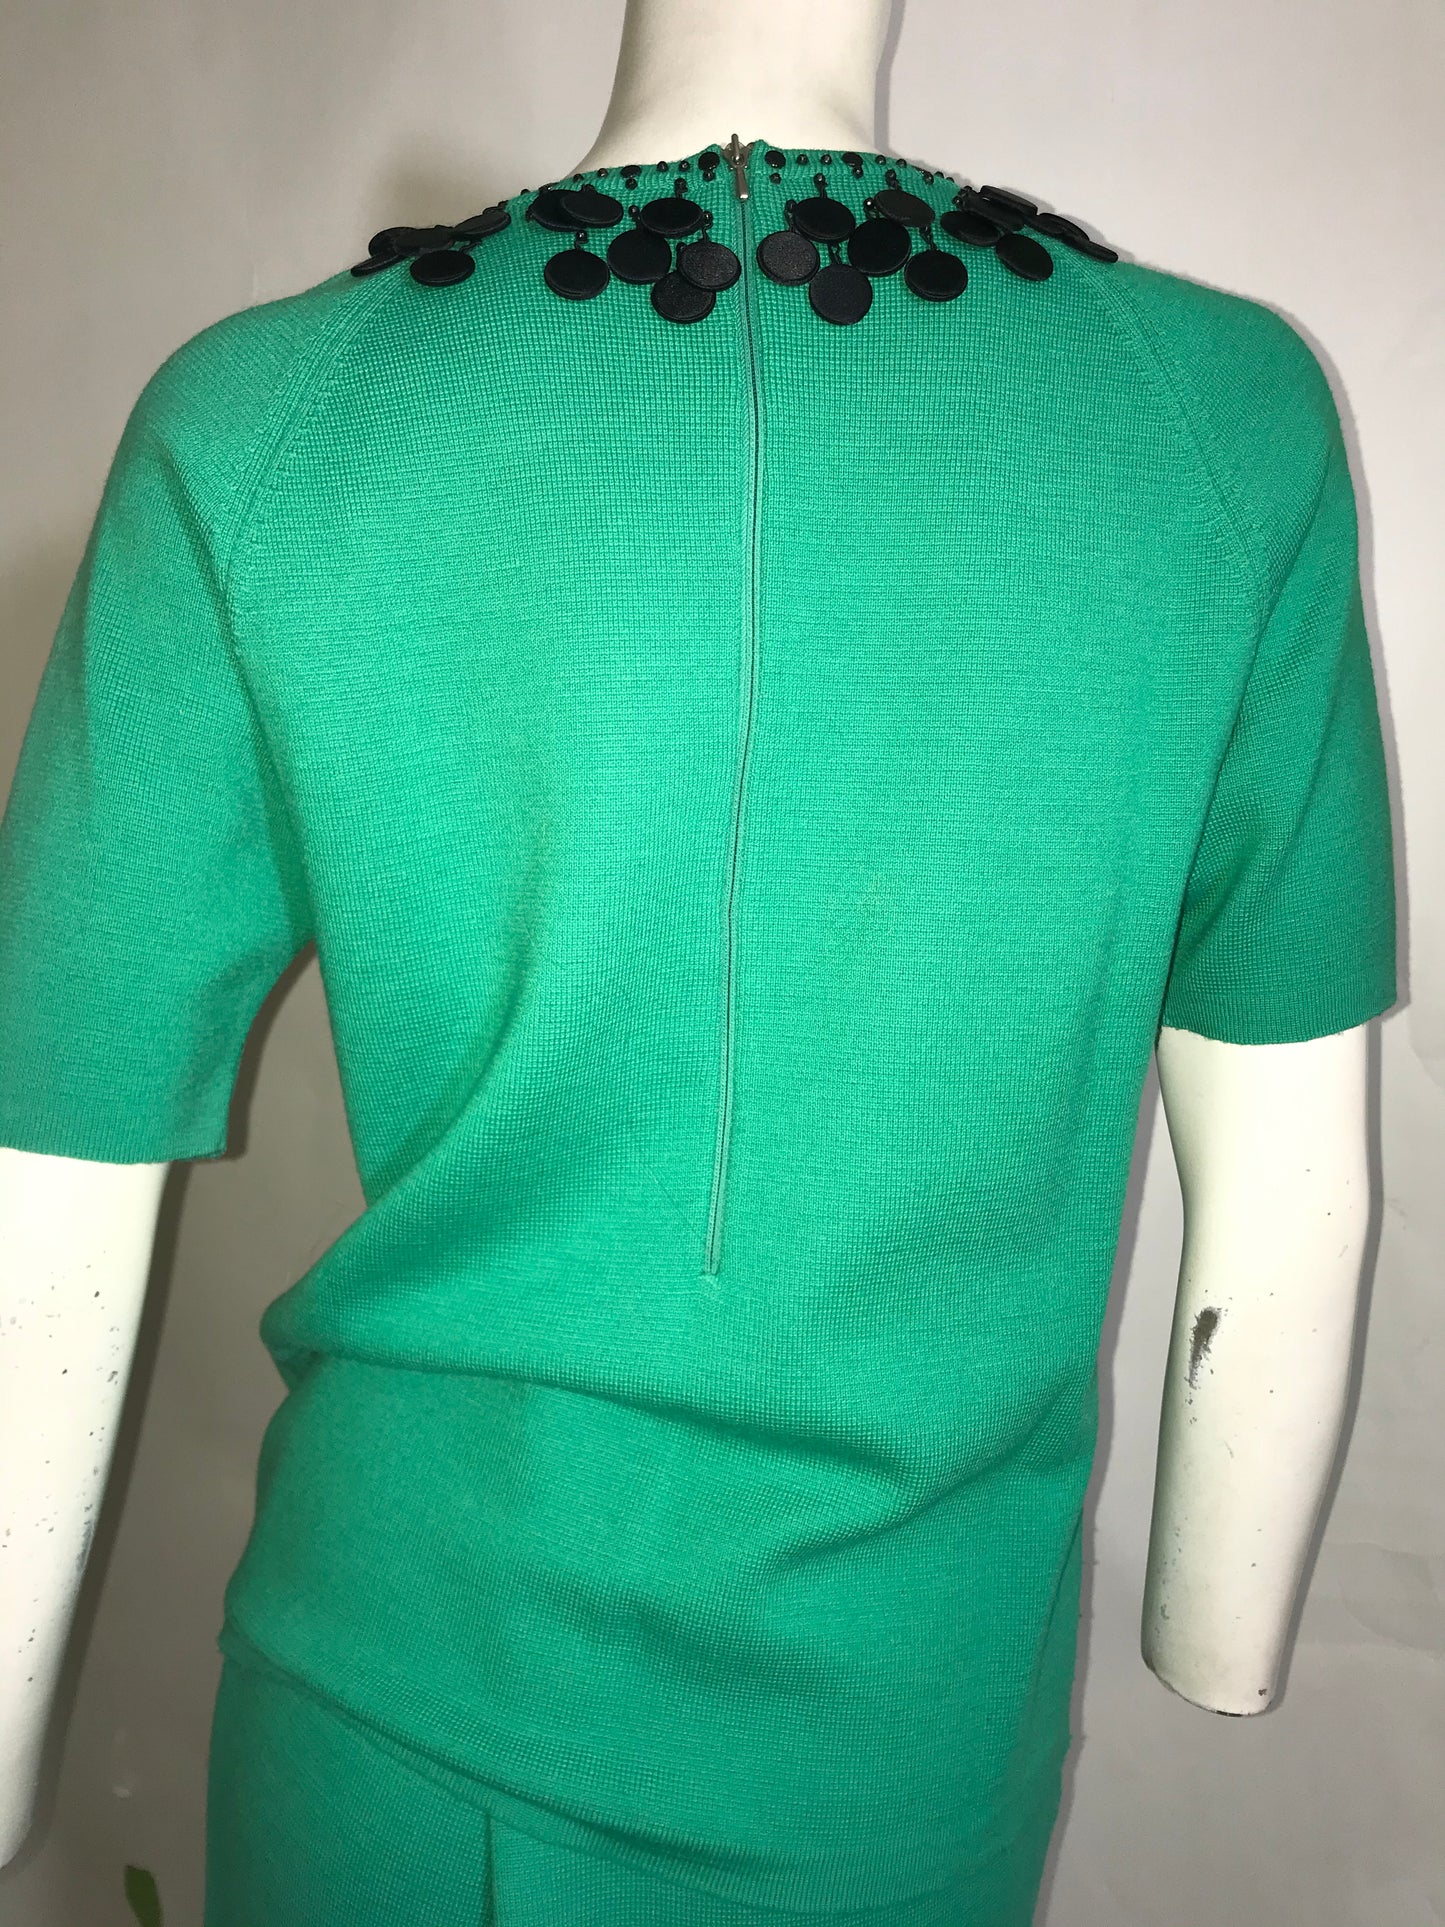 Kelly Green Italian Wool Knit 2 Pc Dress Set with Black Wooden Beads circa 1960s